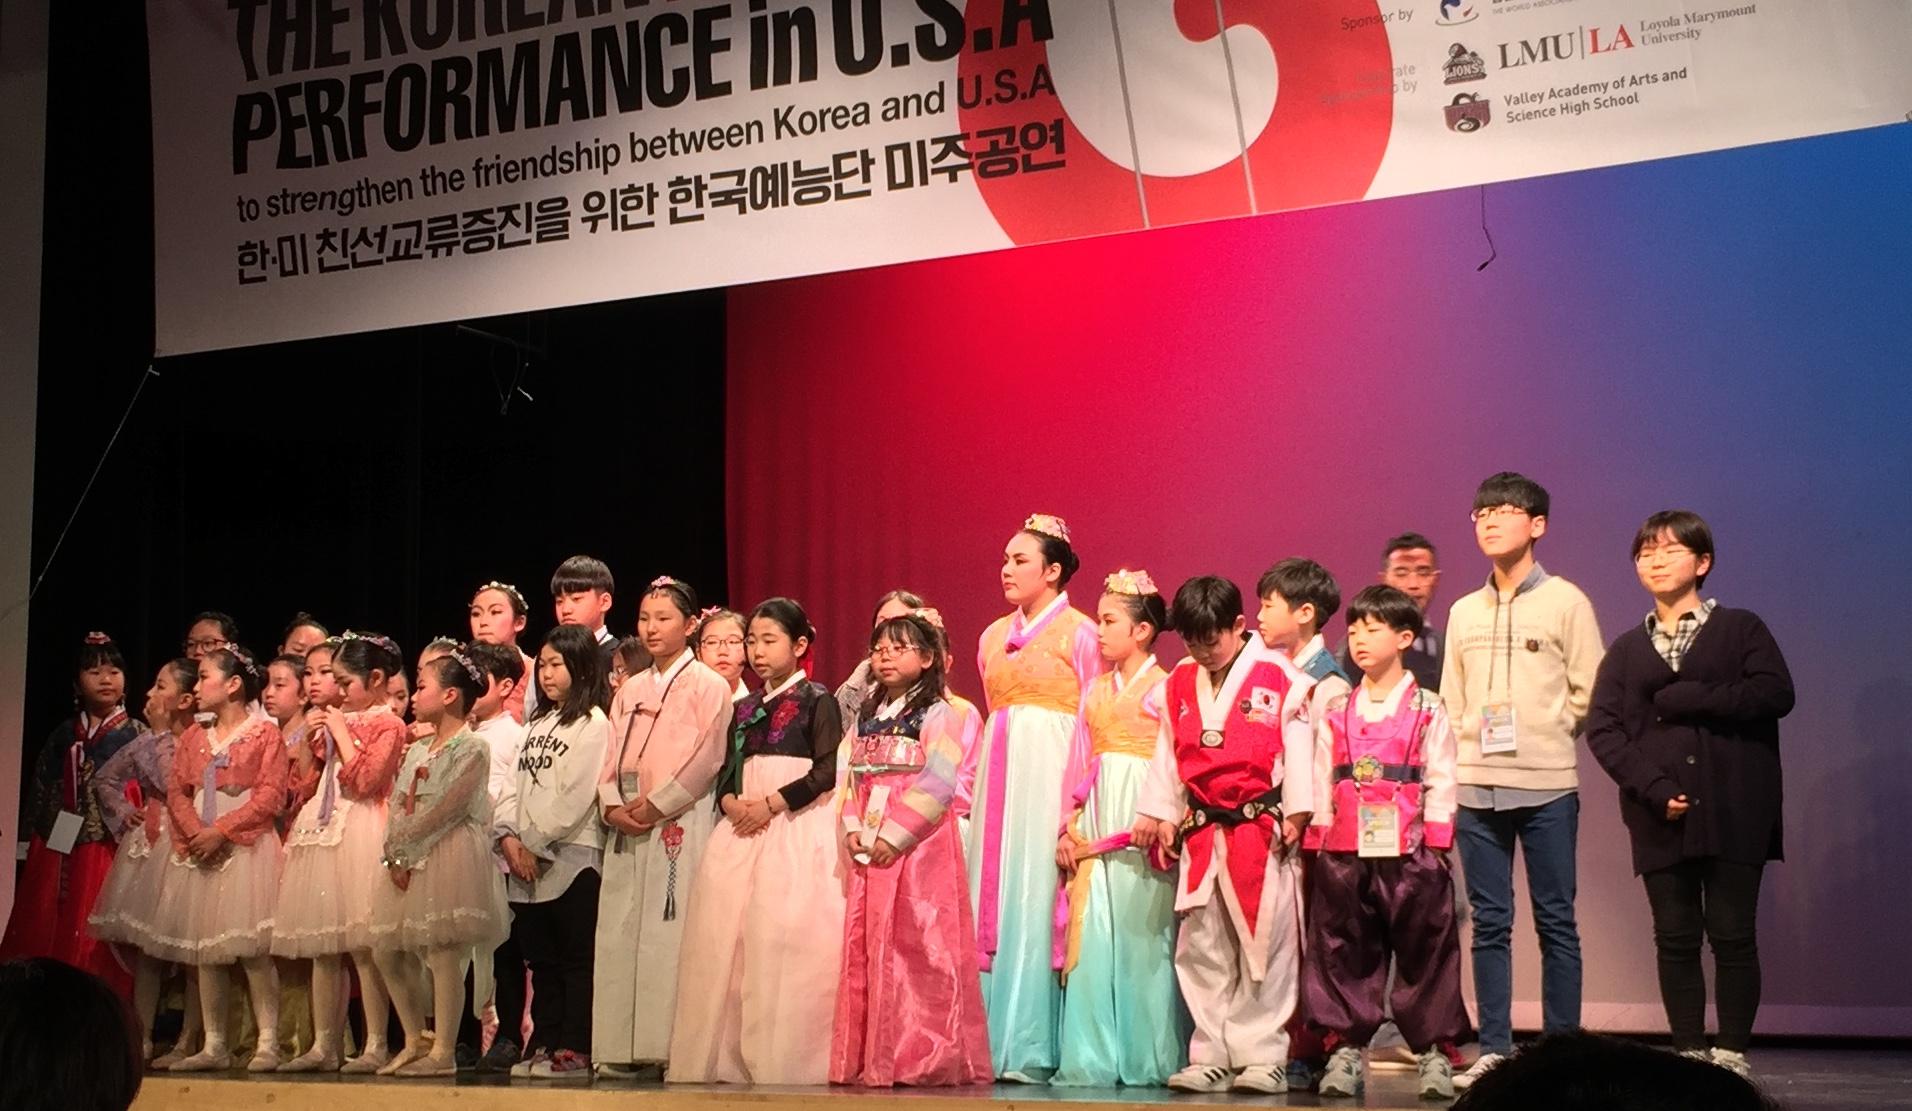 The Korean artists ensemble